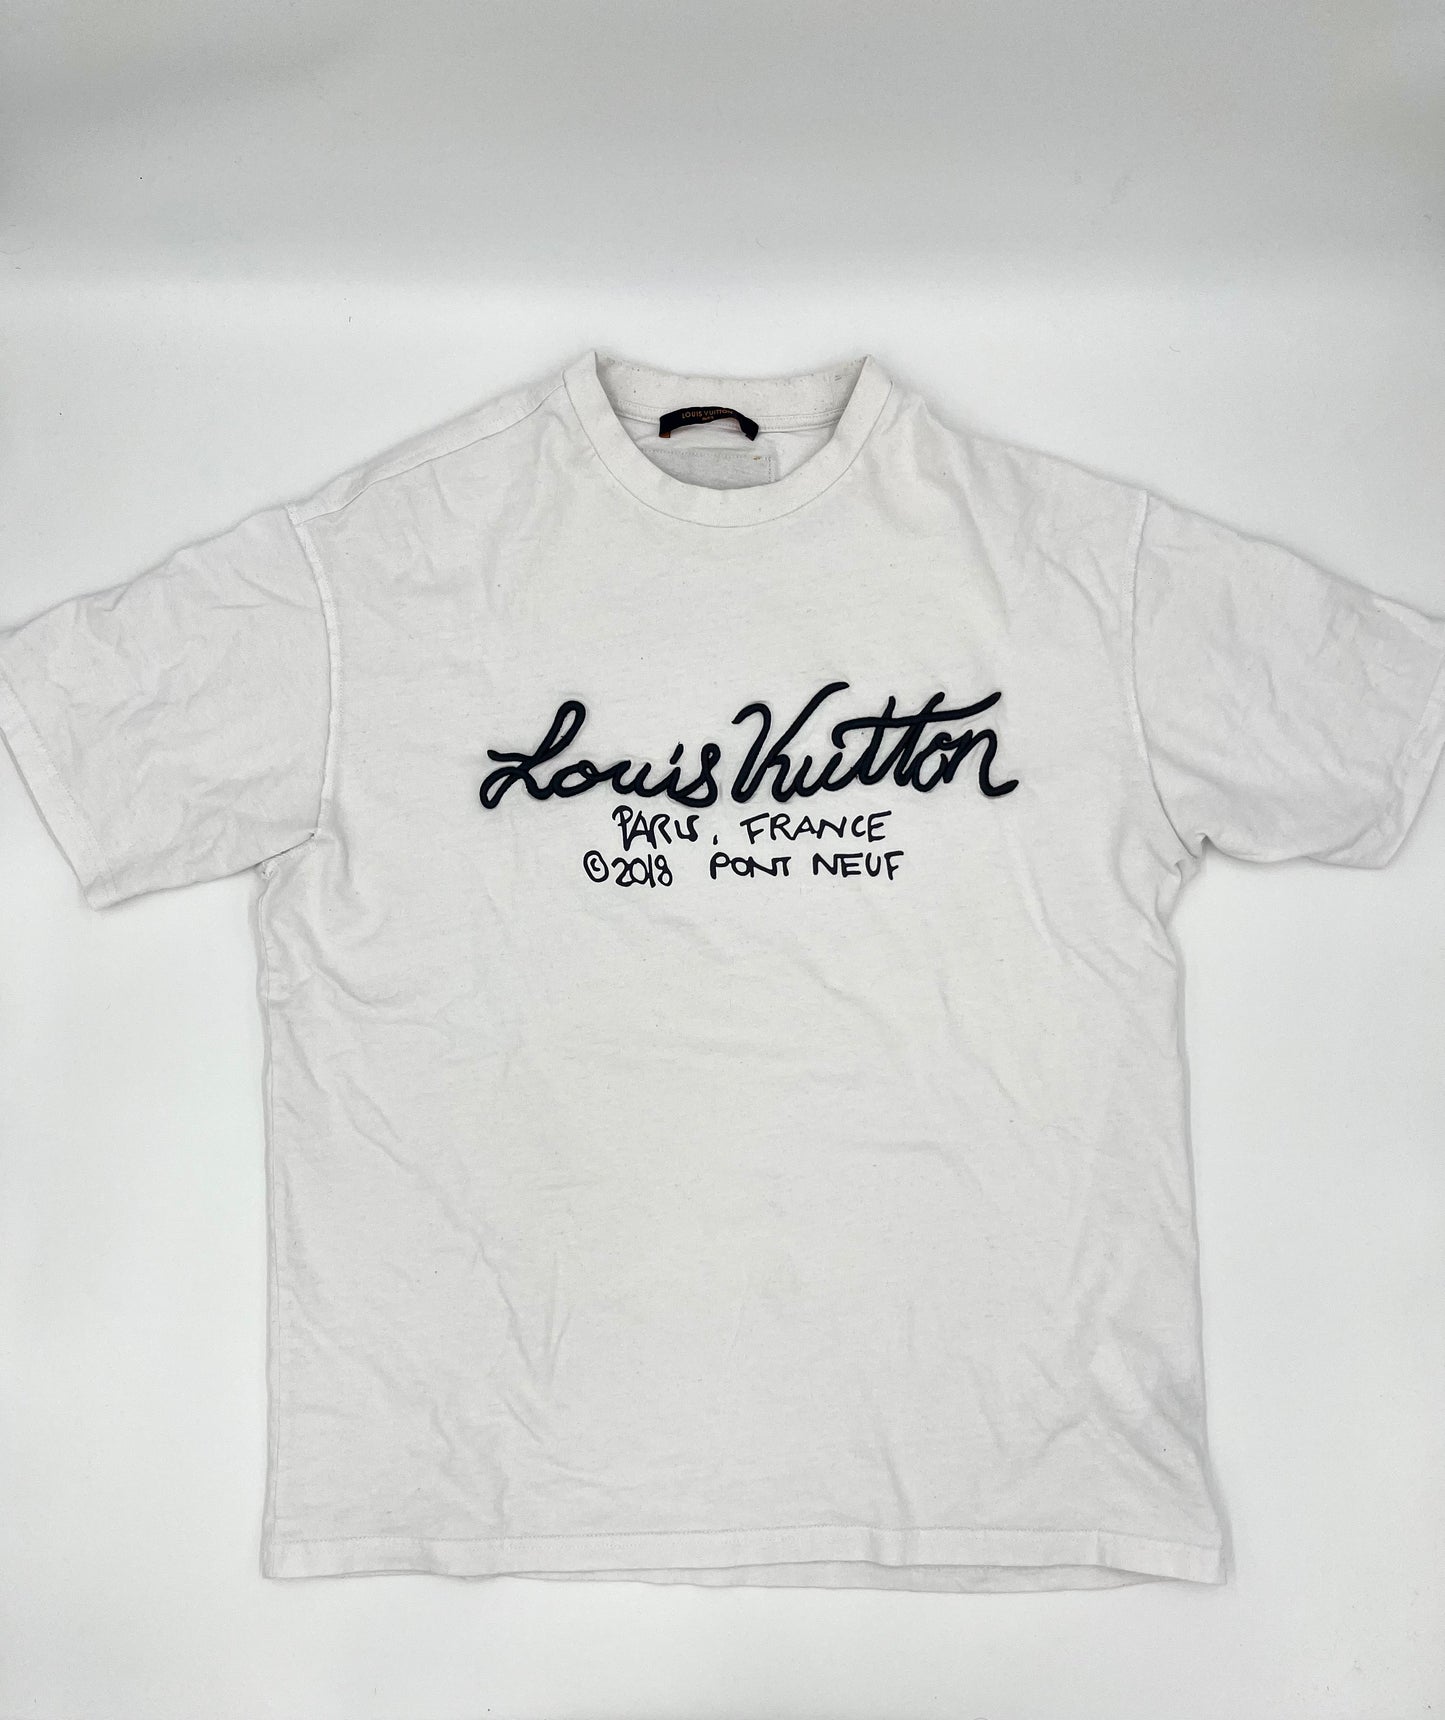 Louis Vuitton Pont Neuf Logo Shirt - Vintage & Classic Tee